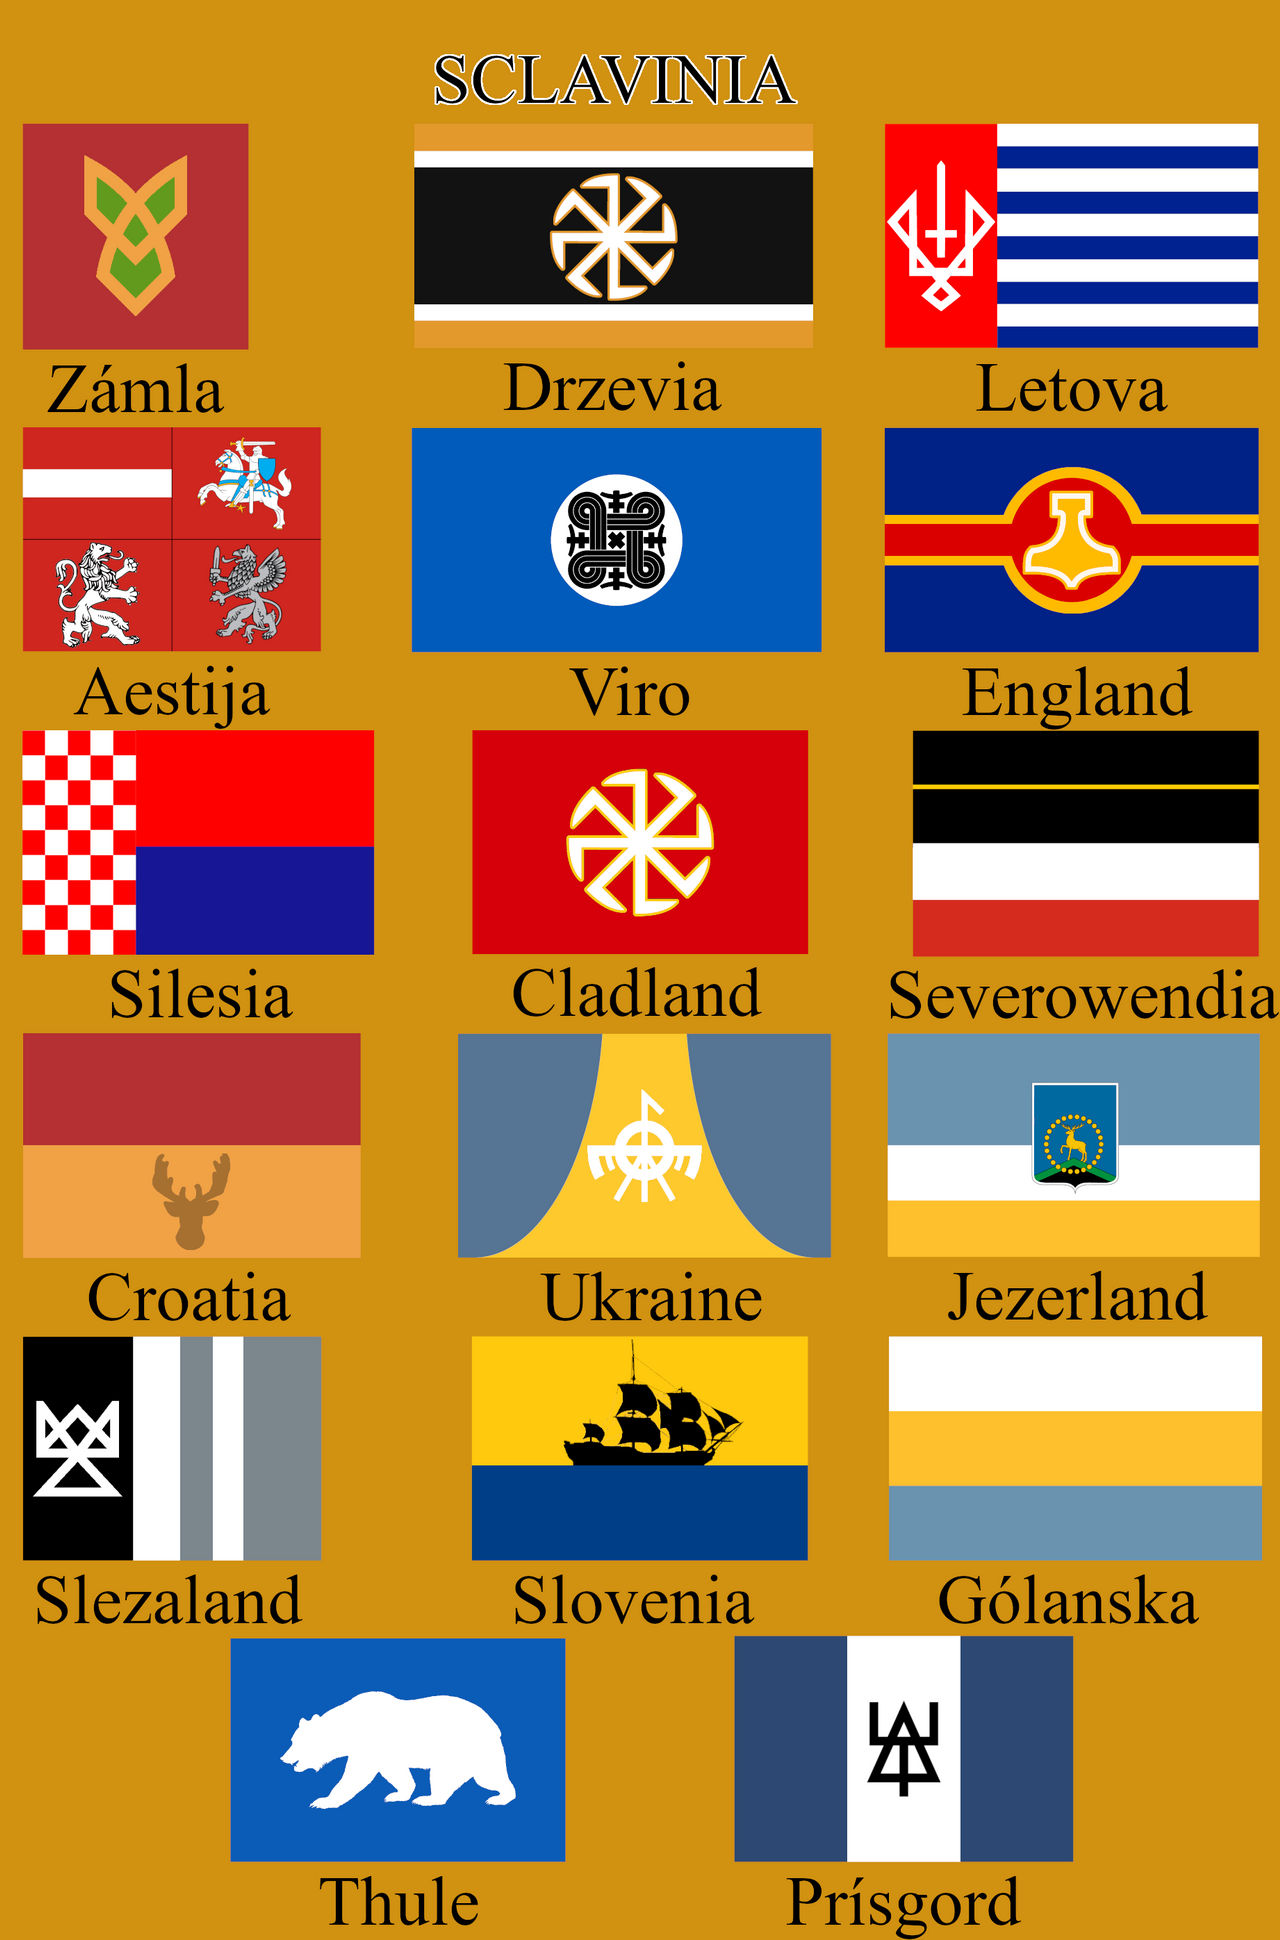 Sclavinia flags by spyrothegamer98 on DeviantArt